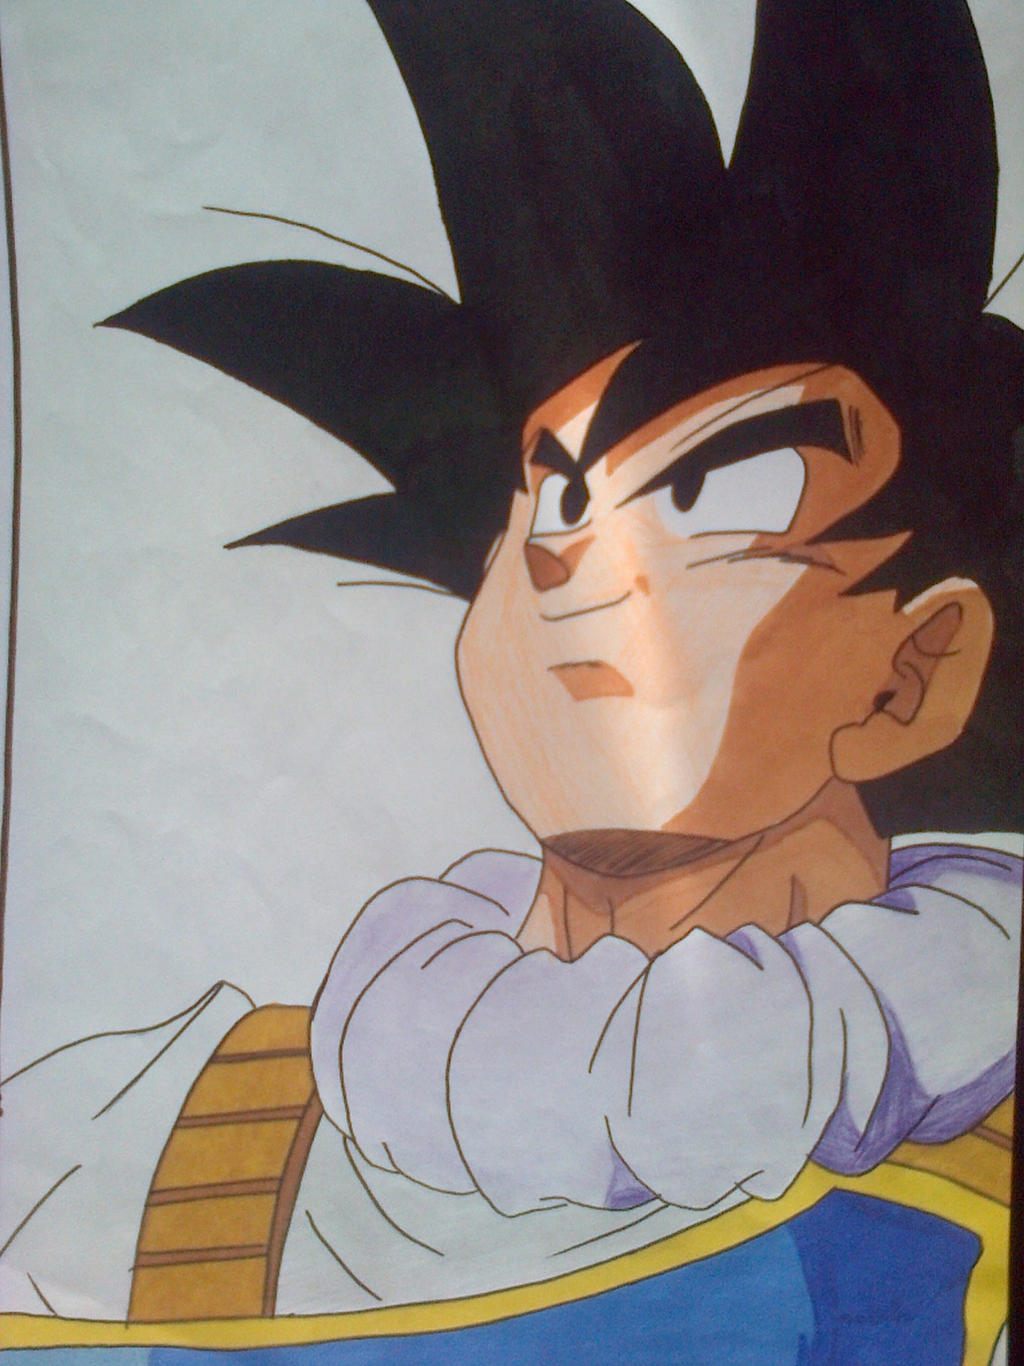 Goku and Pan by Daisuke-Dragneel on DeviantArt